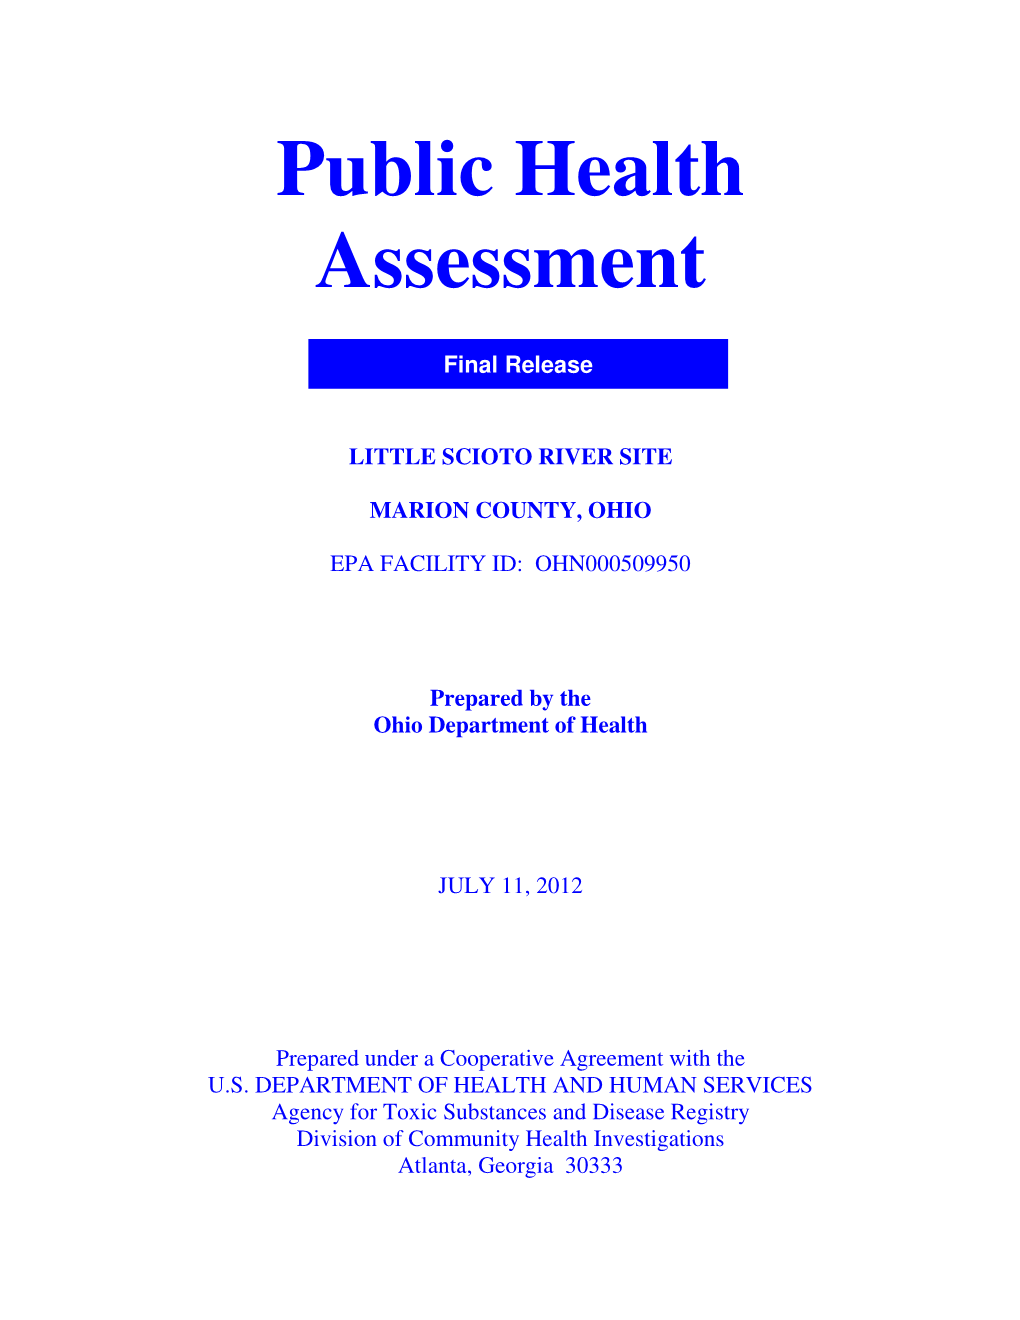 Public Health Assessment